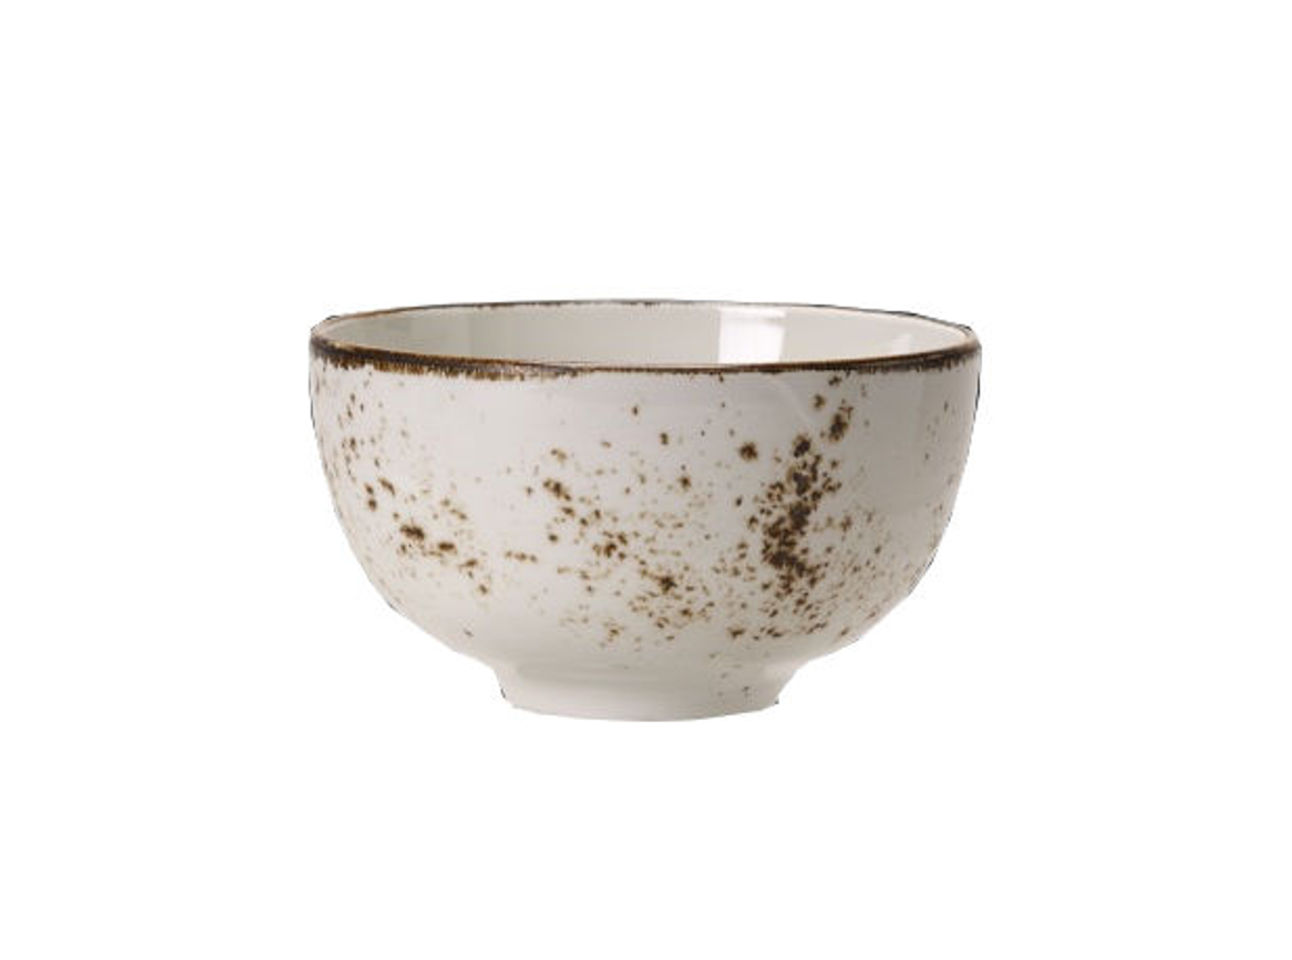 12 x Craft Chinese Bowls